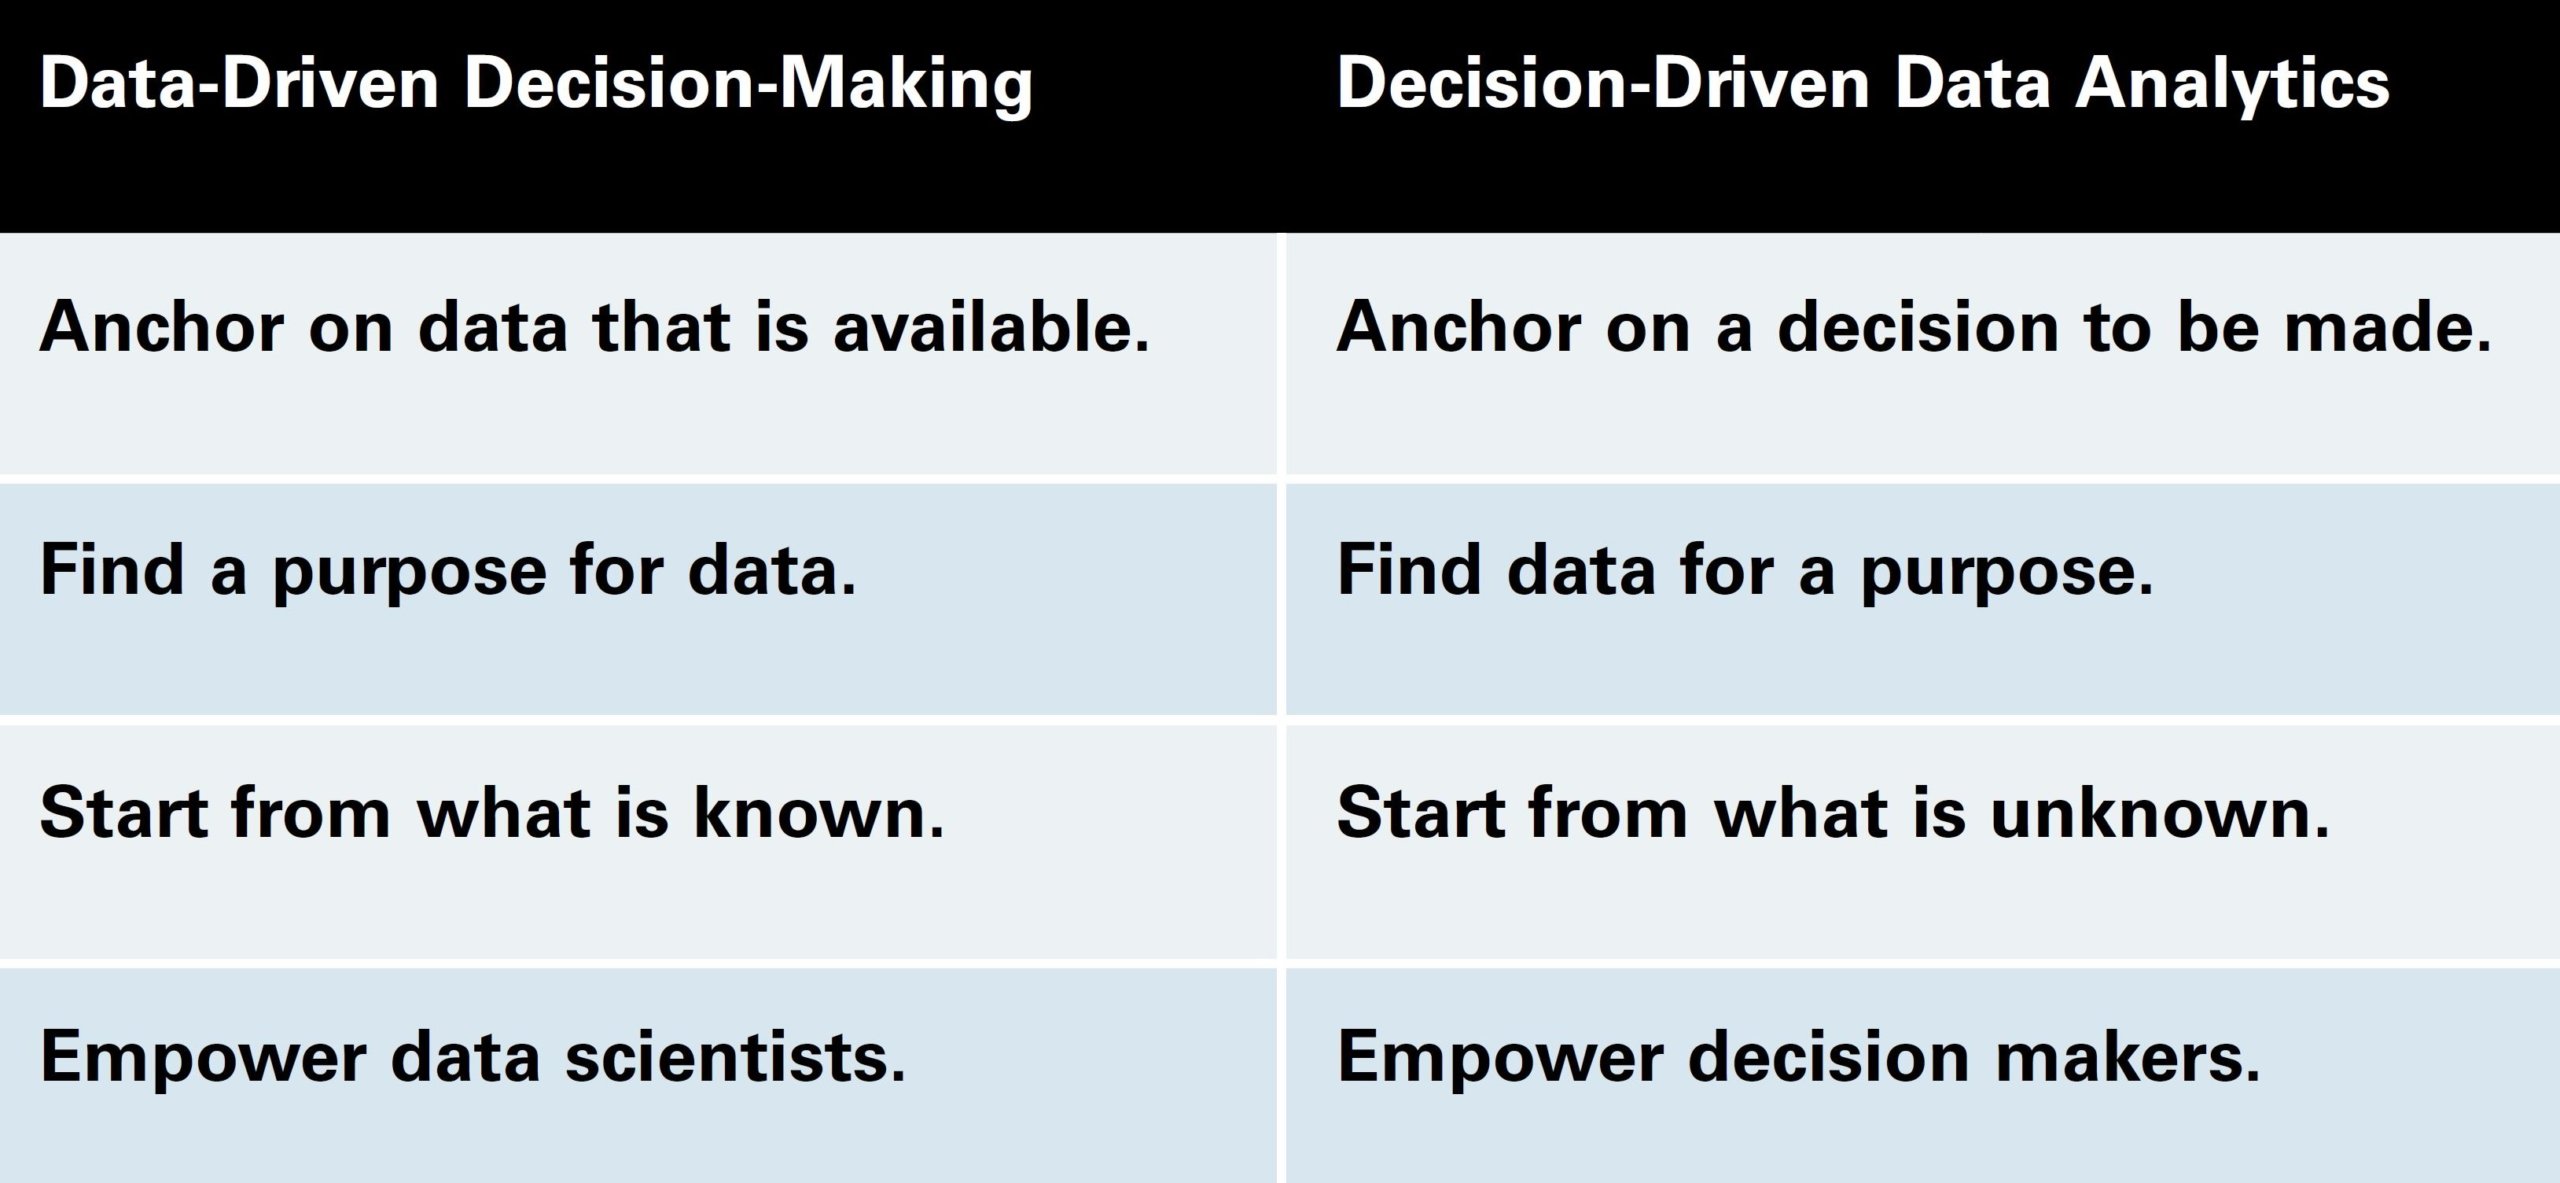 Data-Driven Versus Decision-Driven Data Analytics